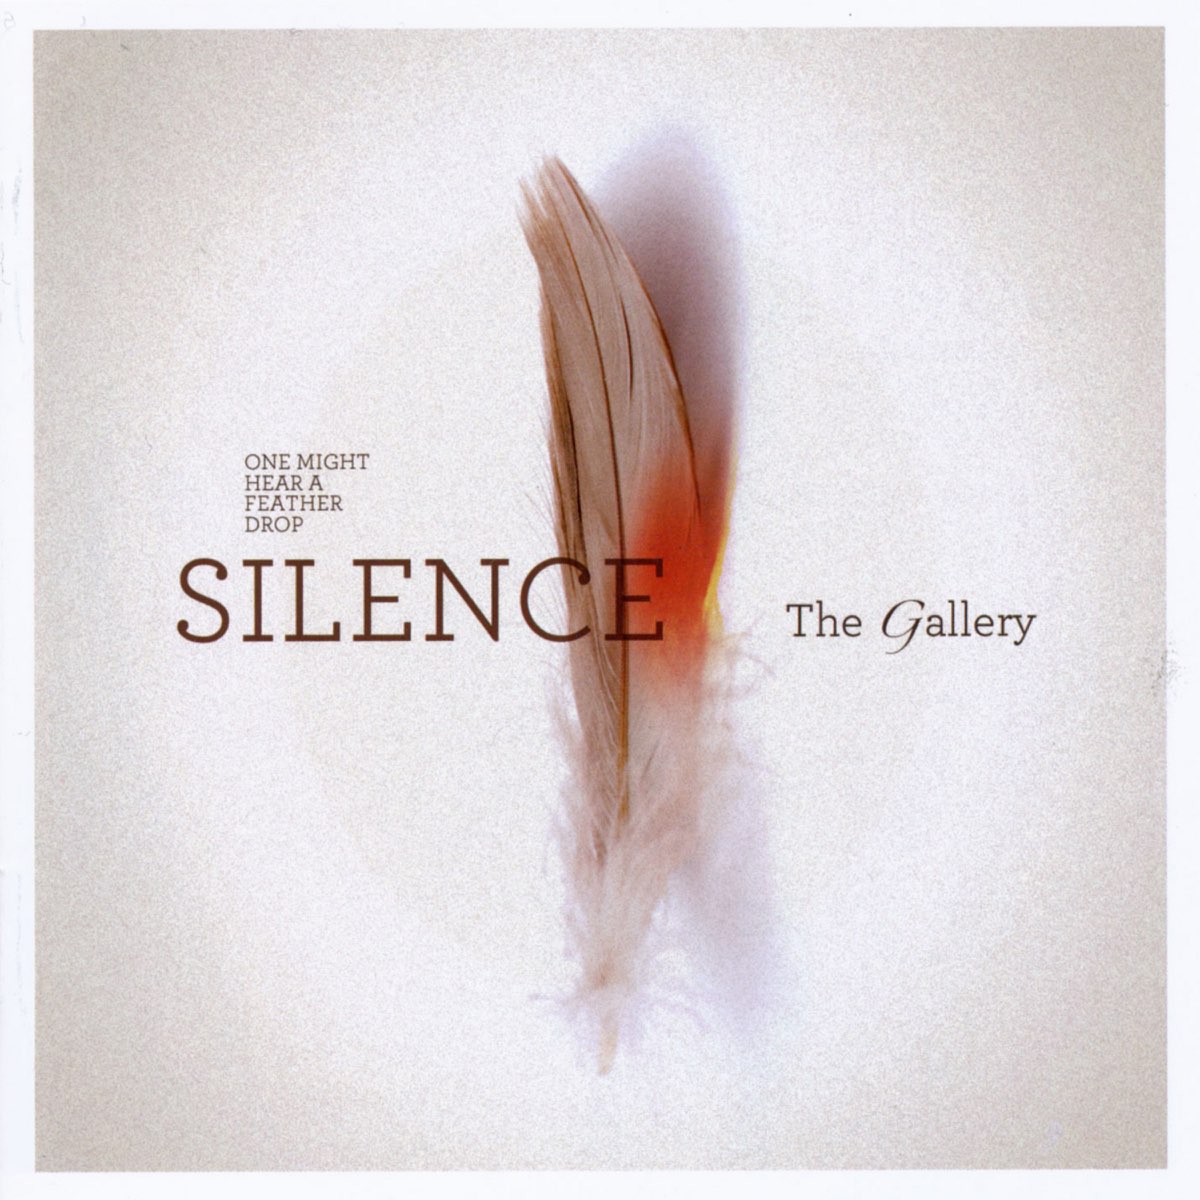 Молчание песня слушать. Silence композиция. Silence песня. Gallery песня. Songs of Silence.